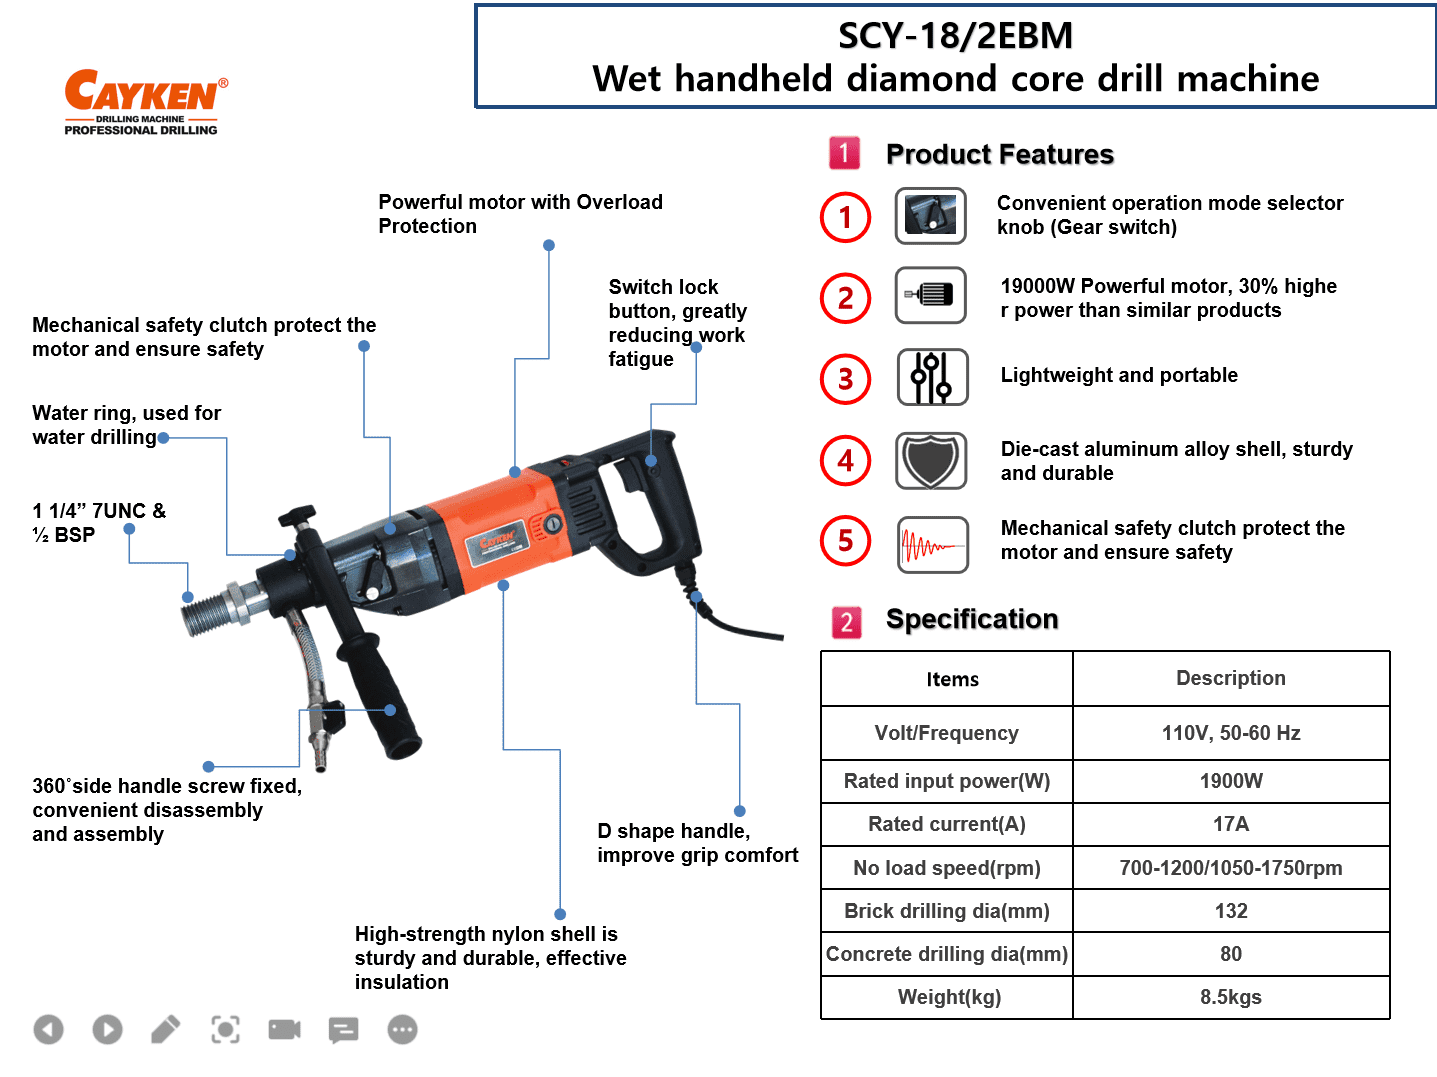 SCY-18 specification